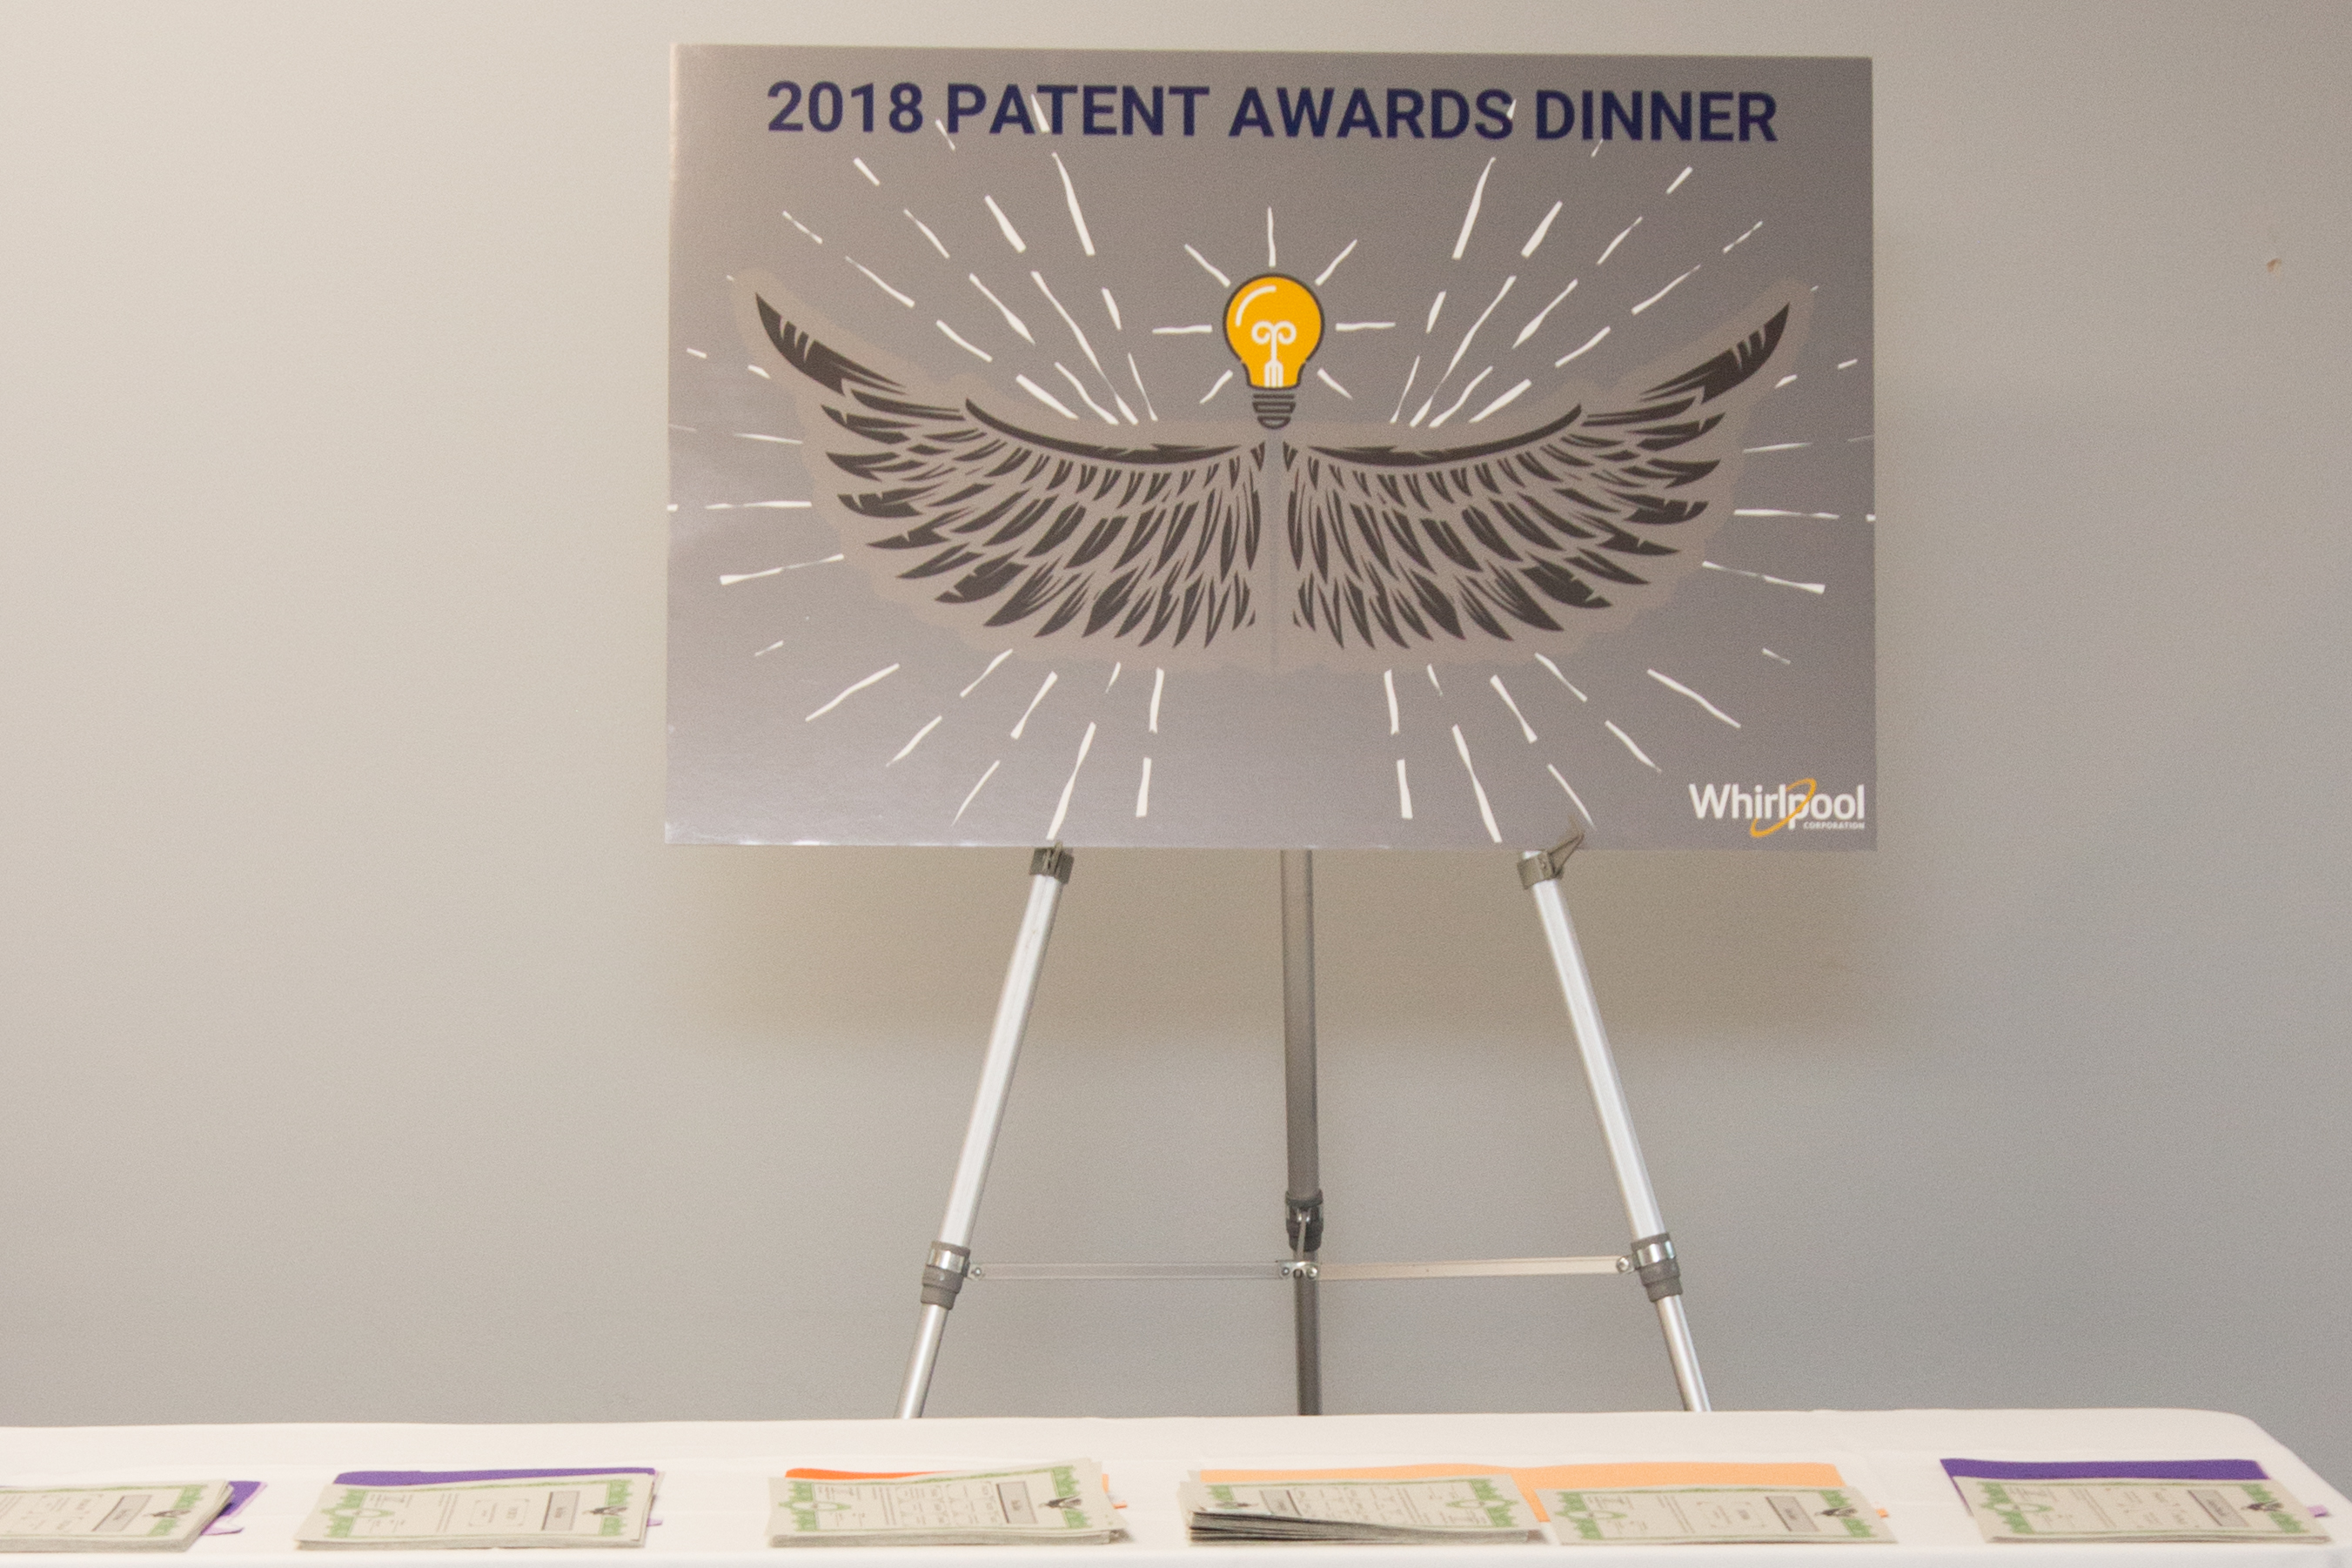 Whirlpool Corporation's 2018 Patent Awards Dinner 